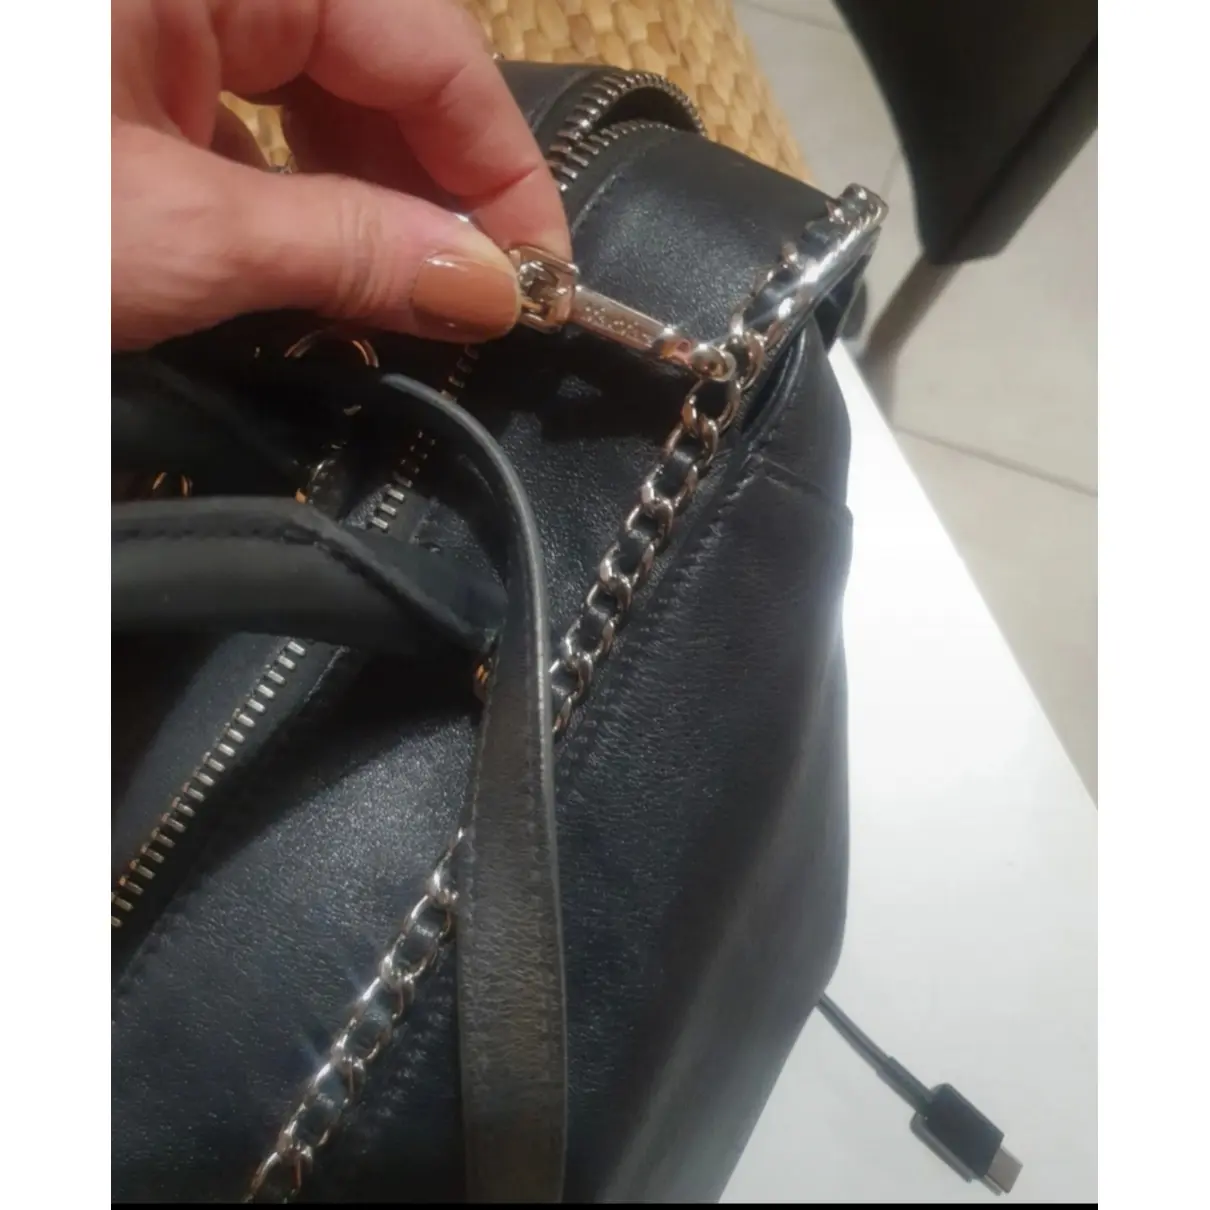 Buy Max Mara Anita leather handbag online